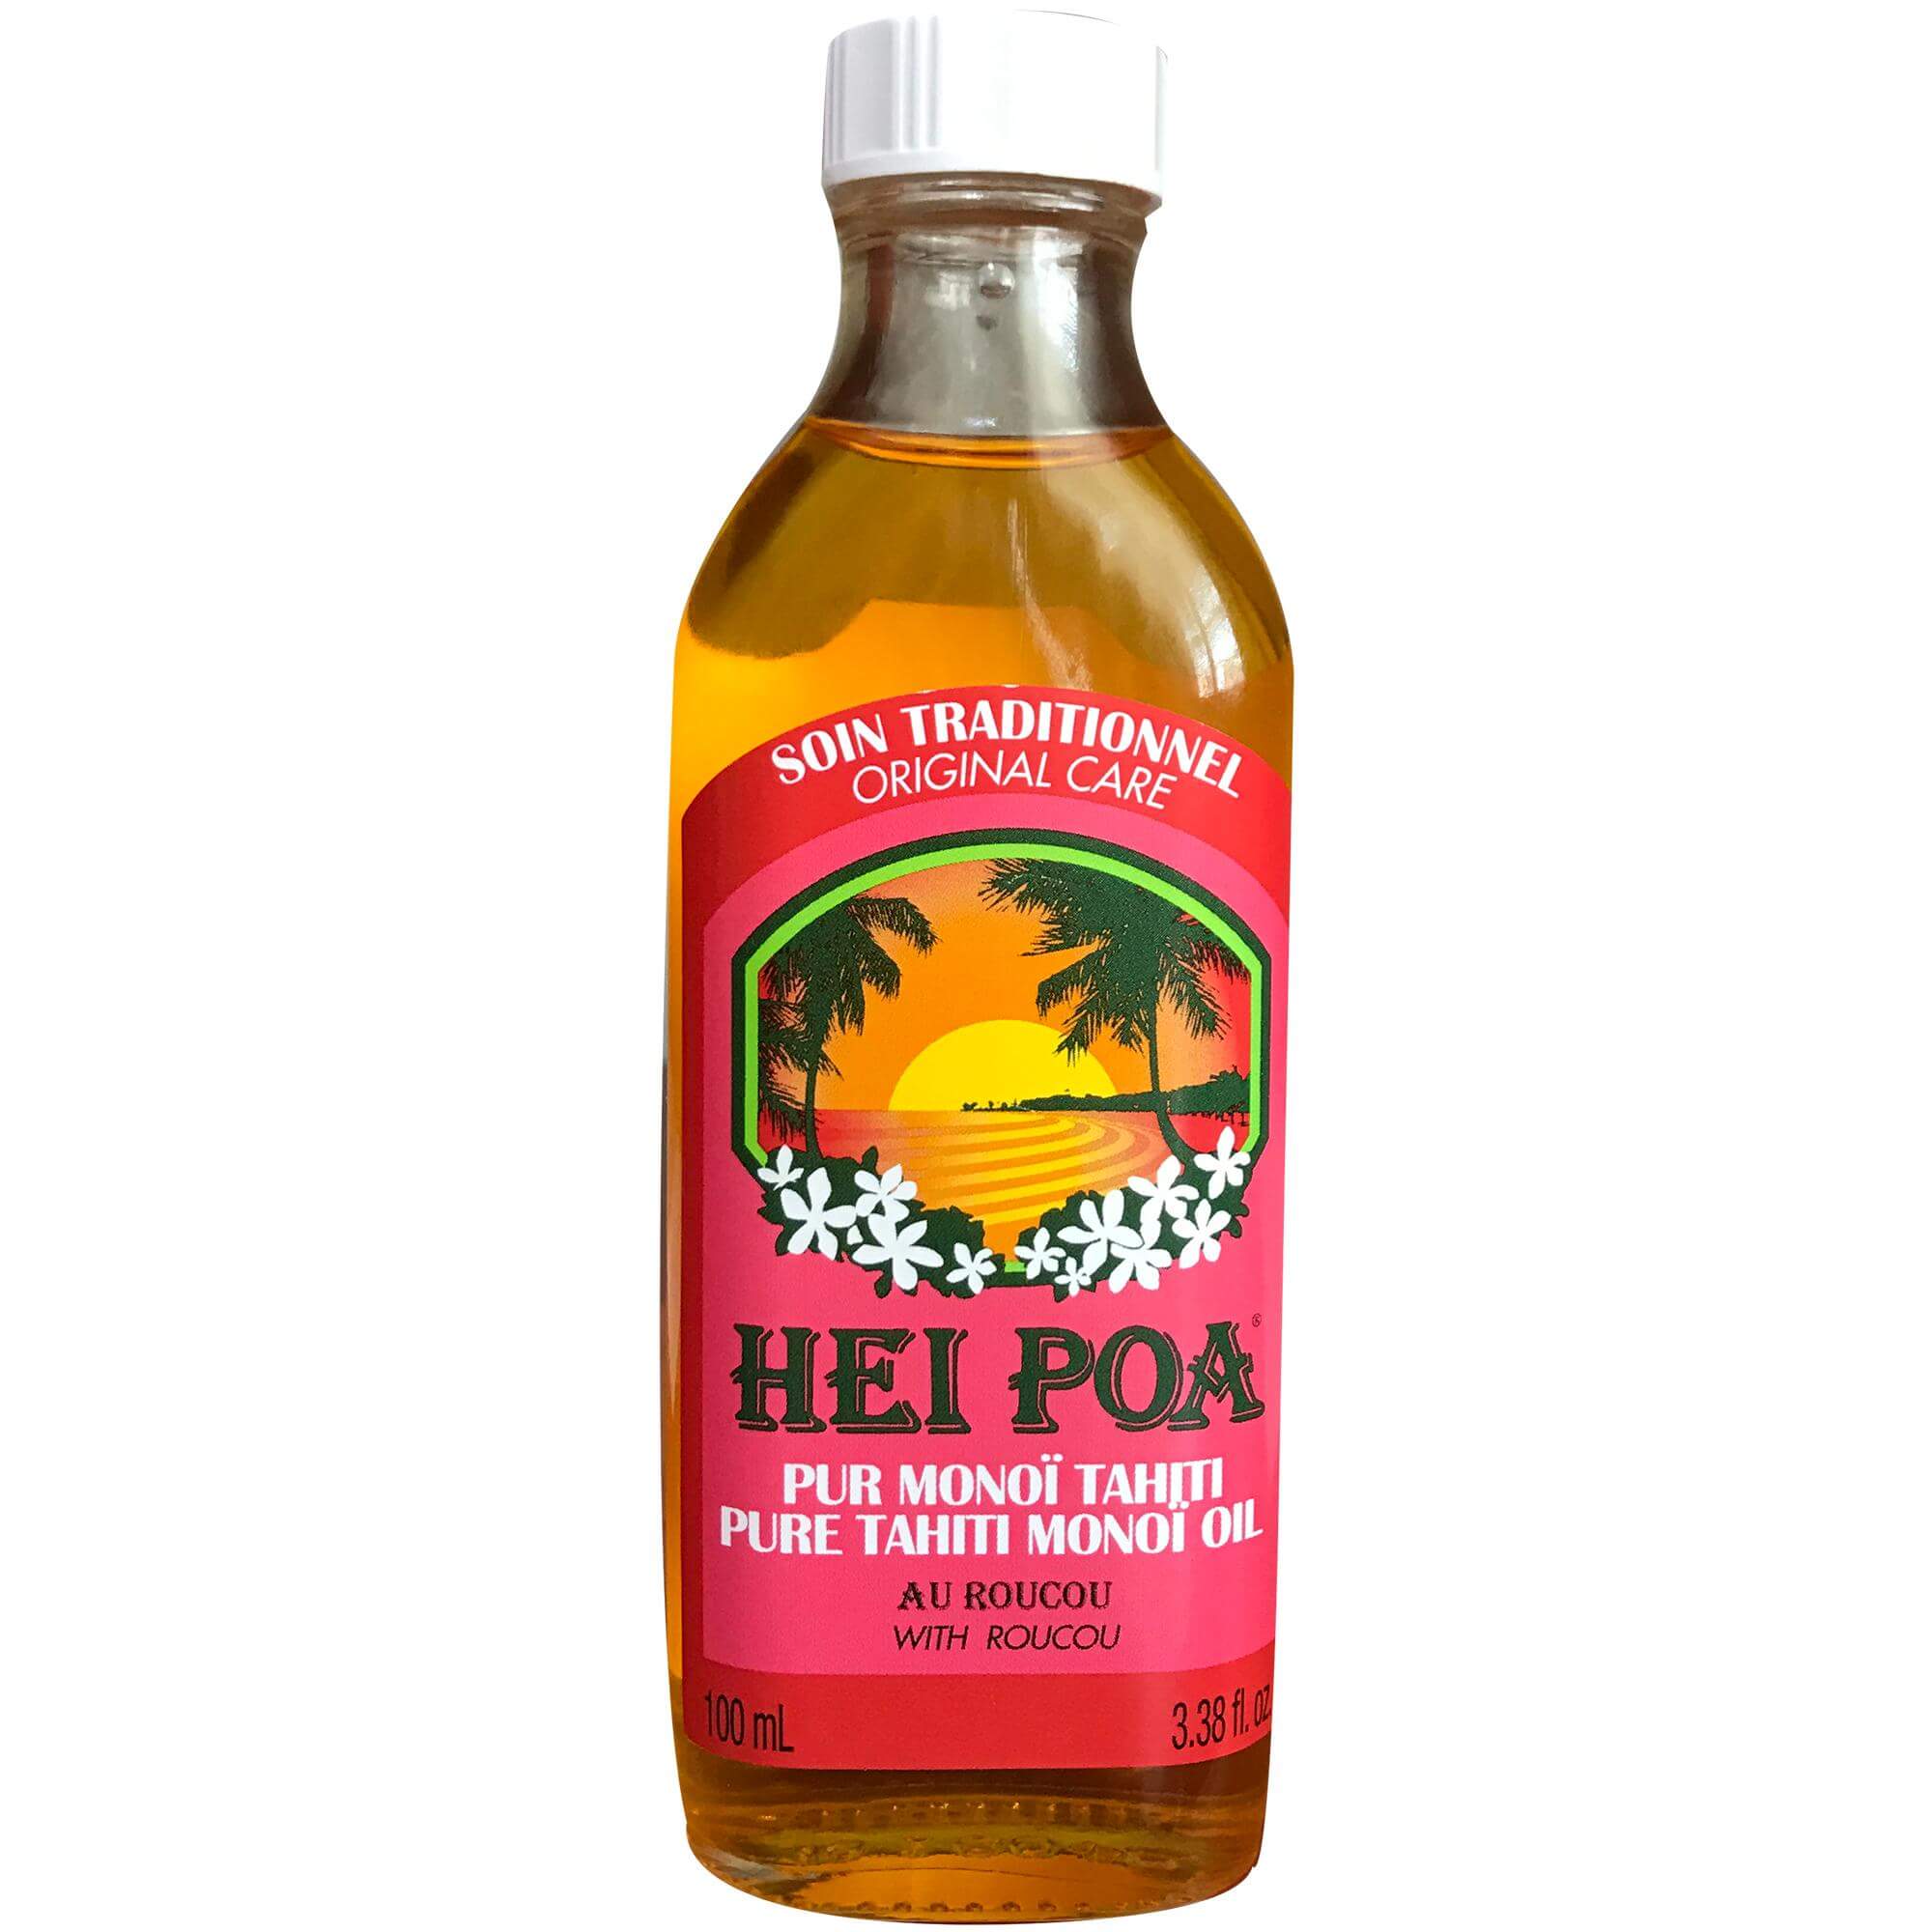 Hei Poa Pure Tahiti Monoi Oil Roucou Προσδίδει Μια Διακριτική, Χάλκινη Απόχρωση 100ml